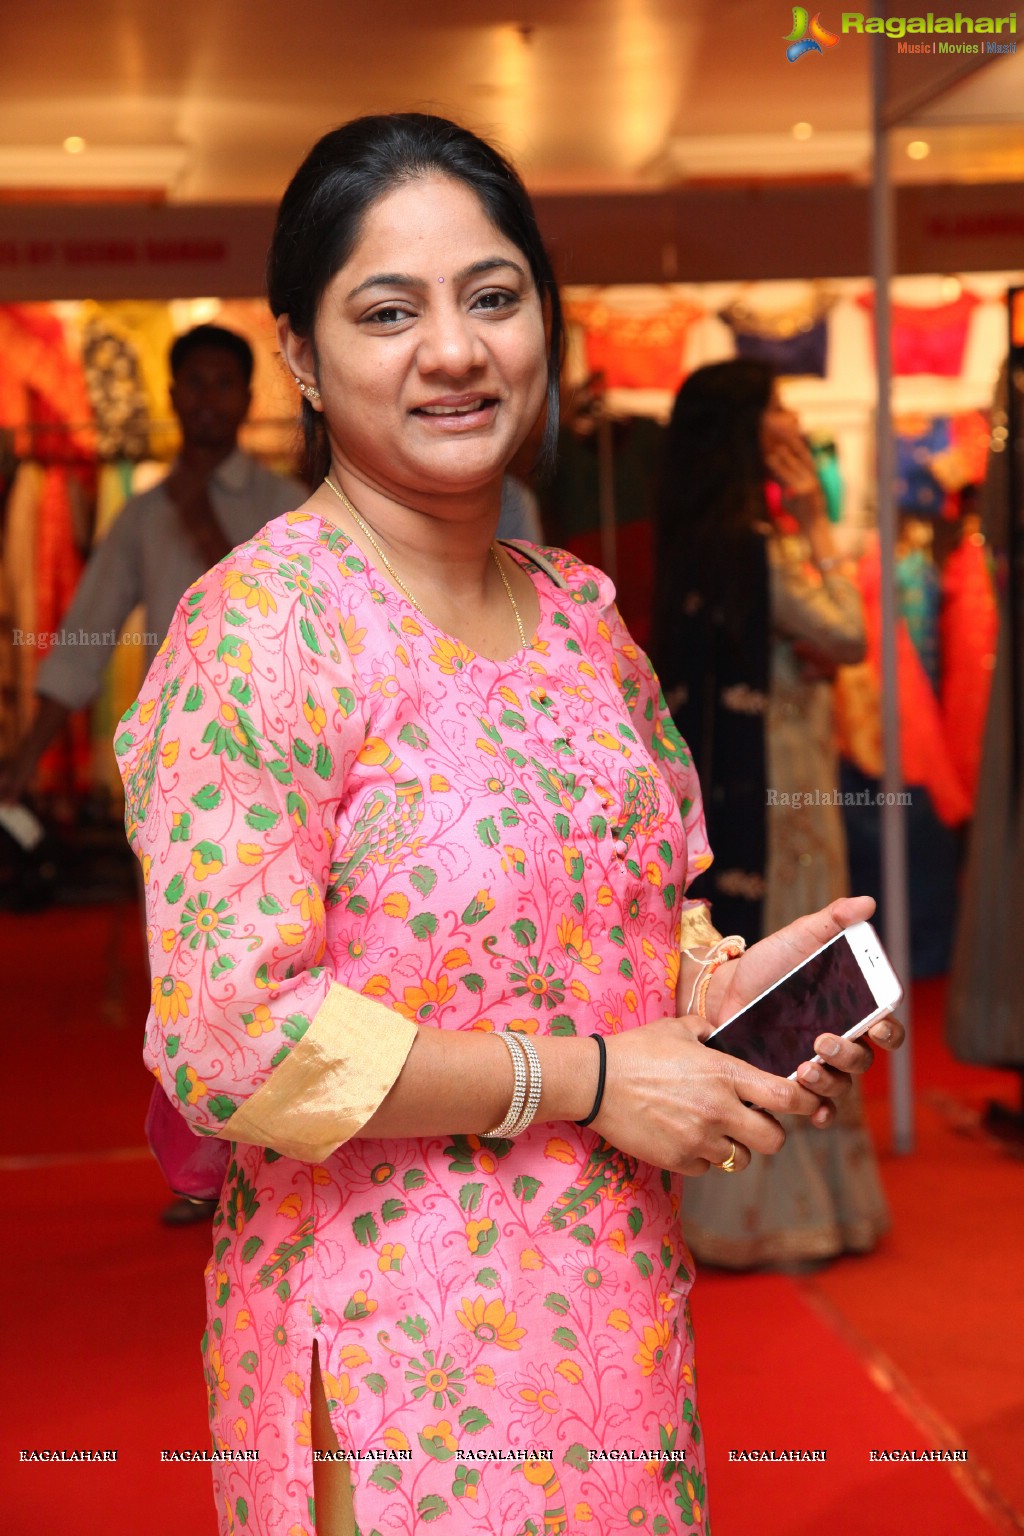 Srishti Vyakaranam launches Khwaaish Designer Lifestyle Exhibition at Taj Krishna